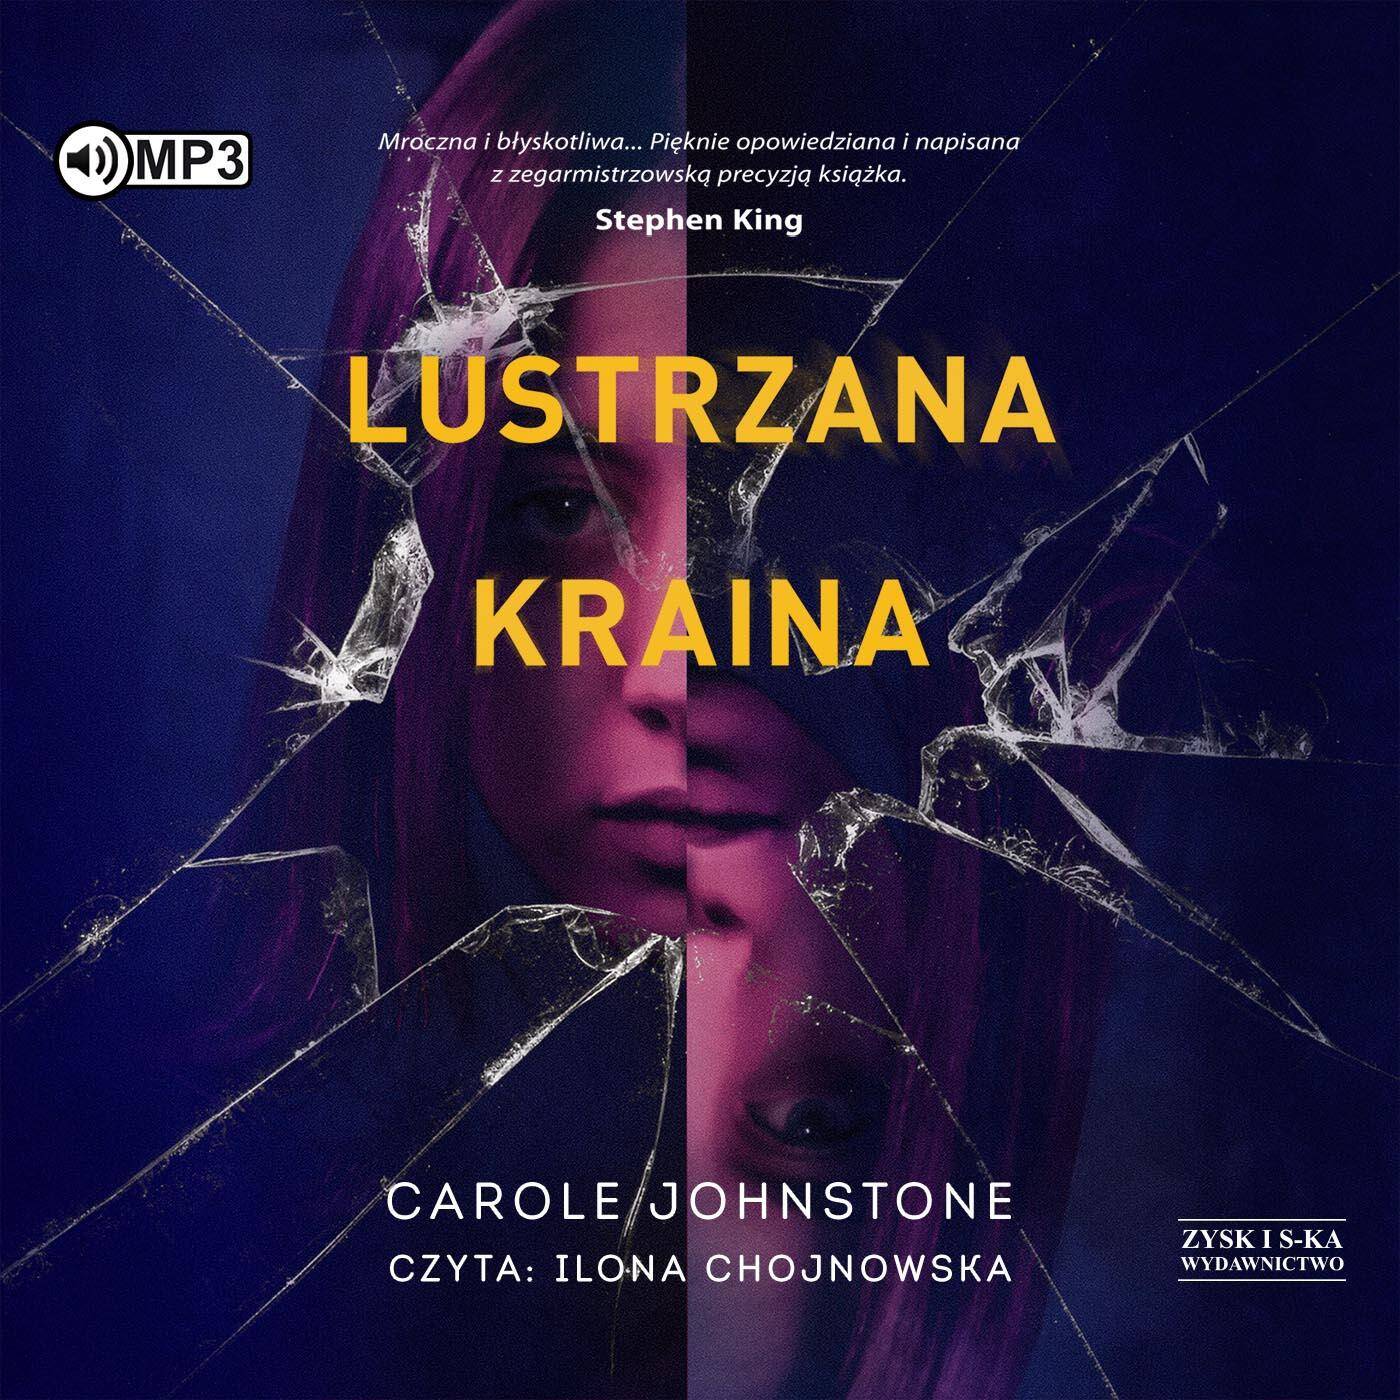 CD MP3 Lustrzana Kraina